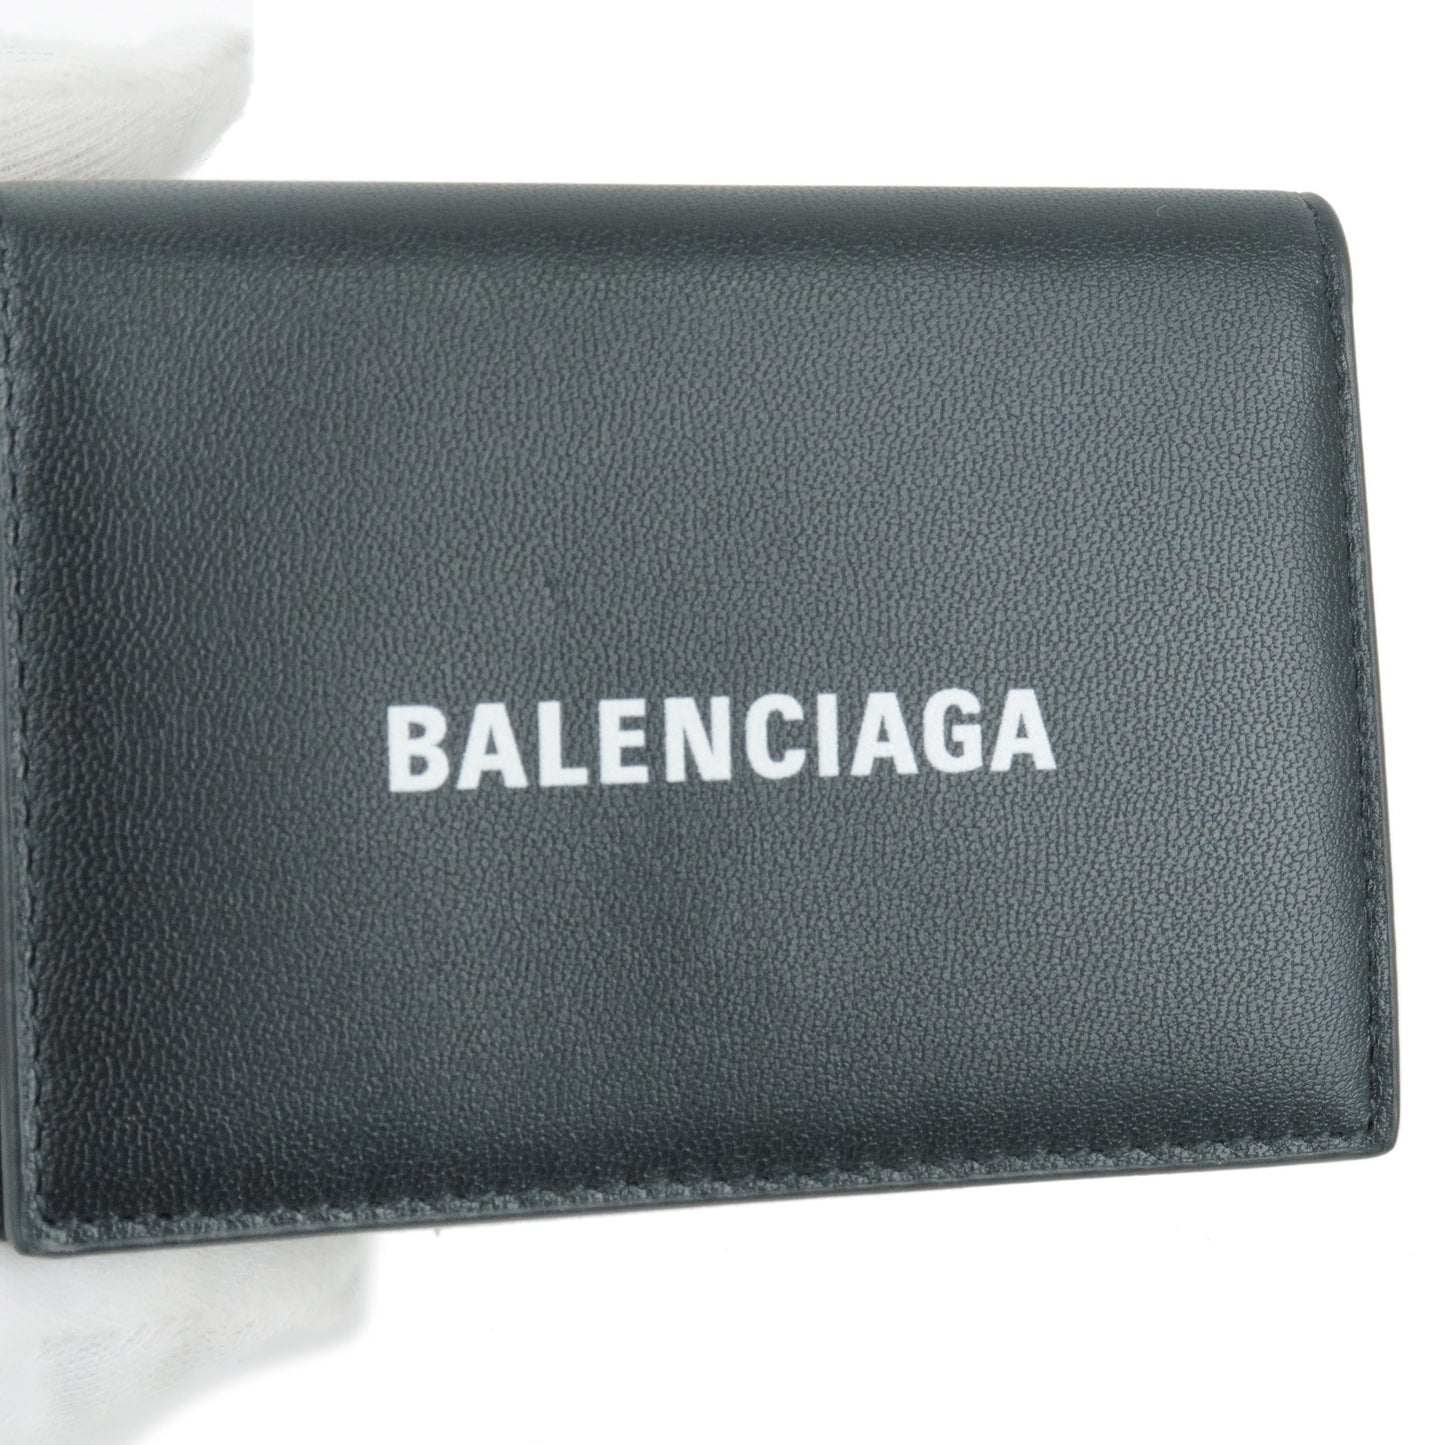 BALENCIAGA Leather Cash Mini Wallet Tri-Fold Wallet Black 594312